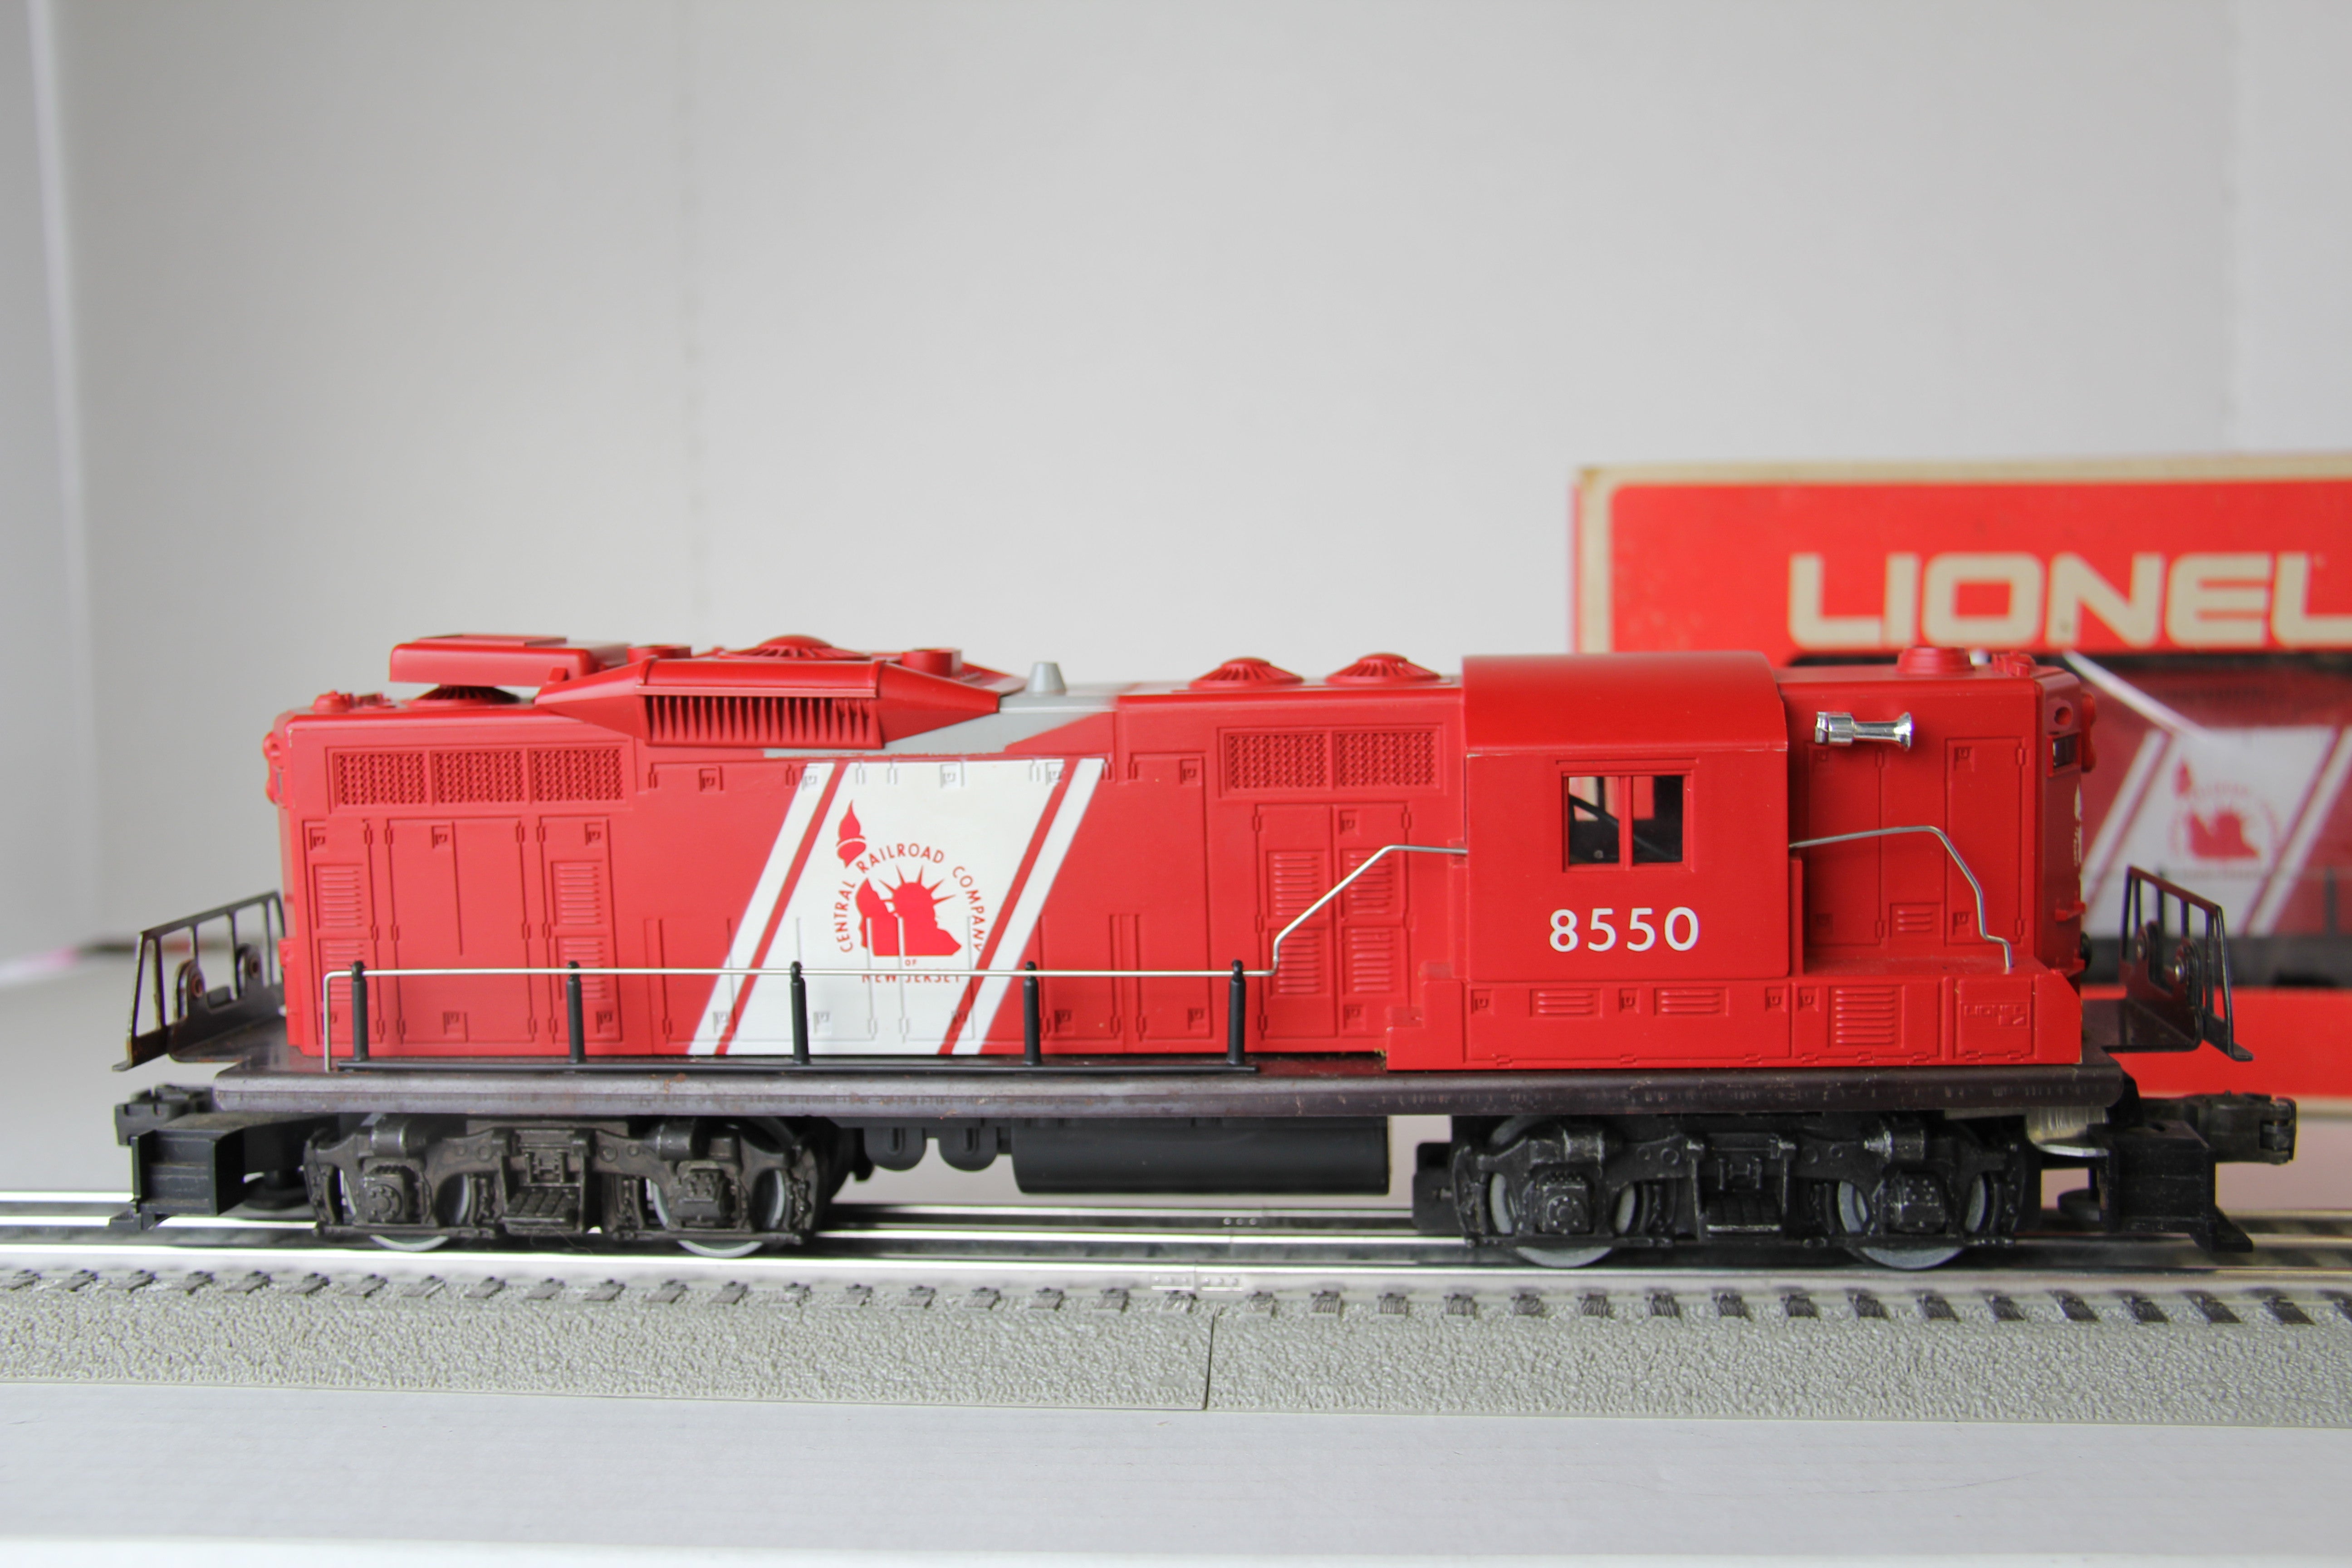 Lionel 6-8550 Jersey Central GP-9 Diesel & 6-8561 Non Powered-Second hand-M3993